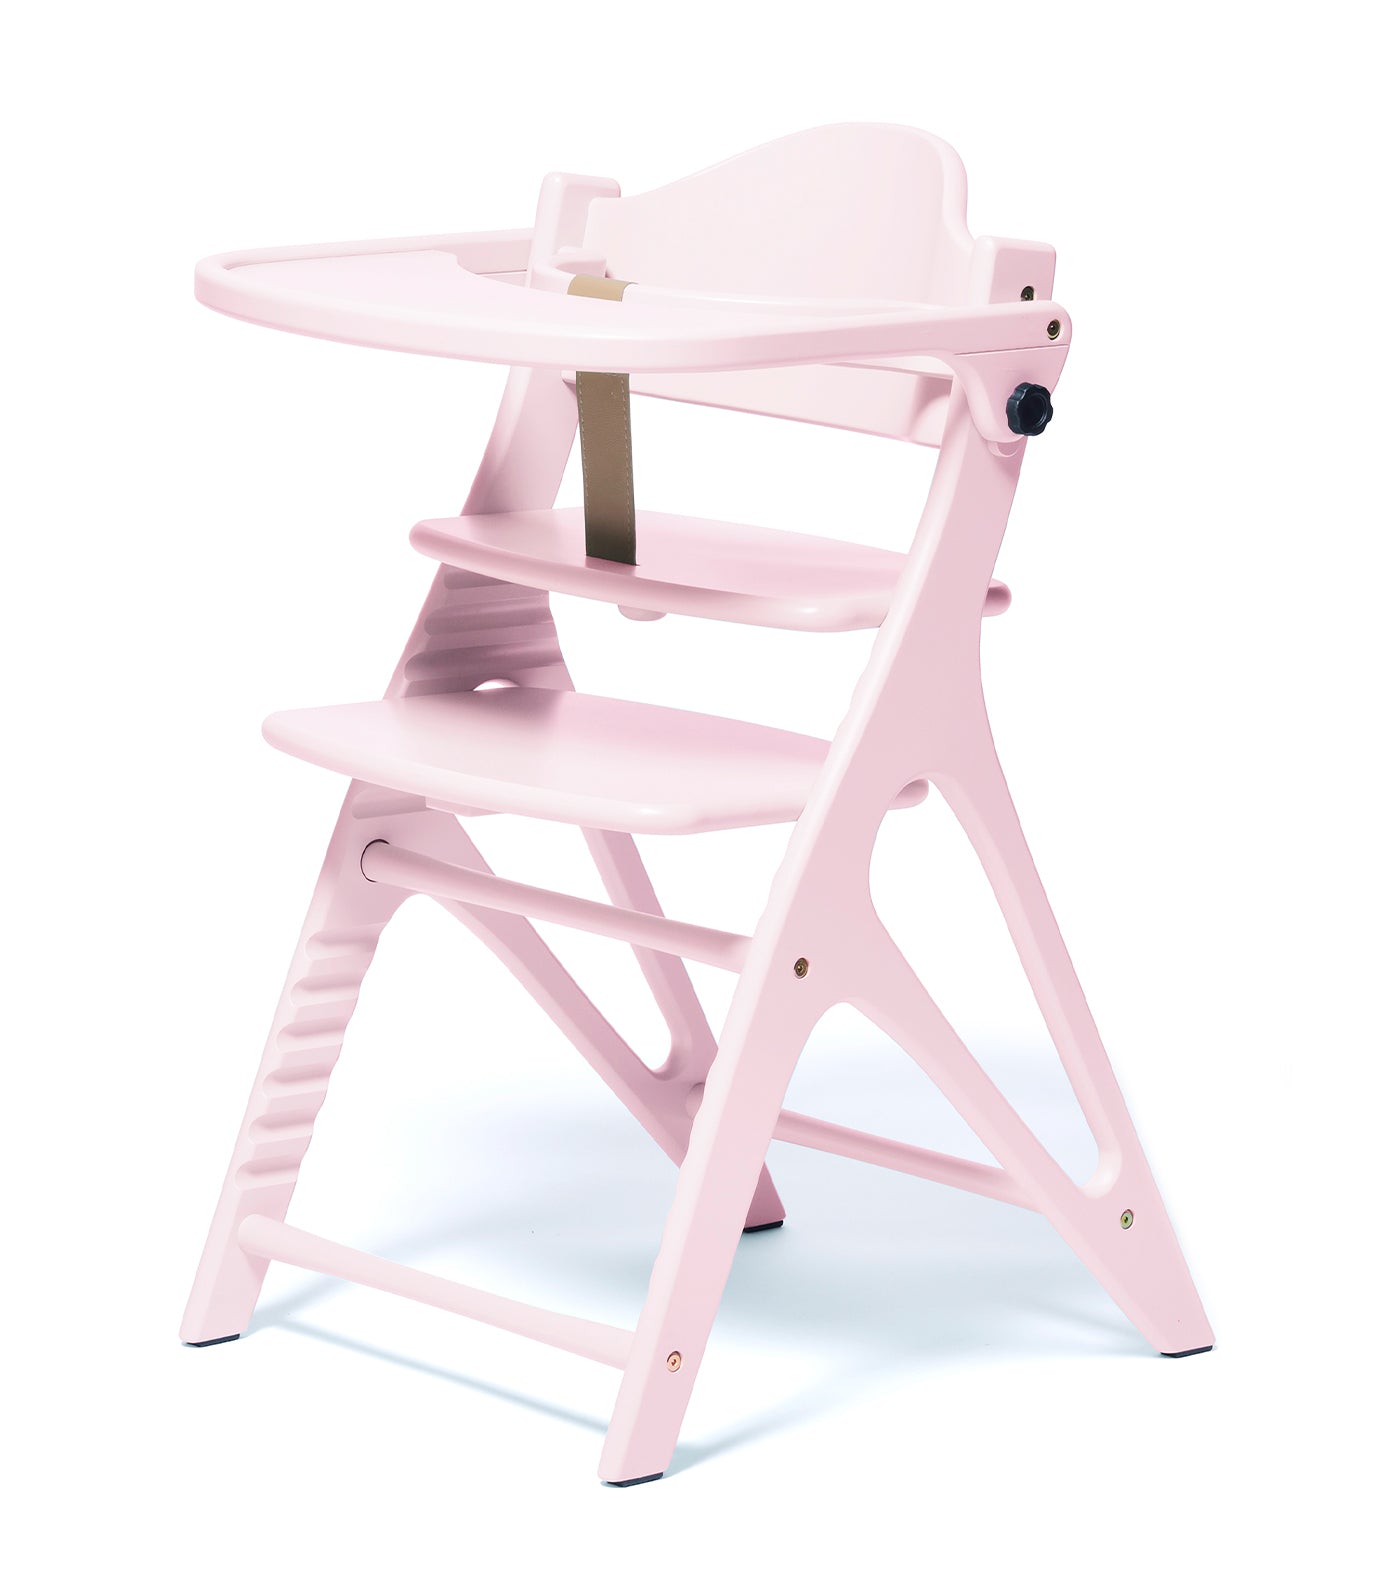 Affel Wooden High Chair - Milky Pink